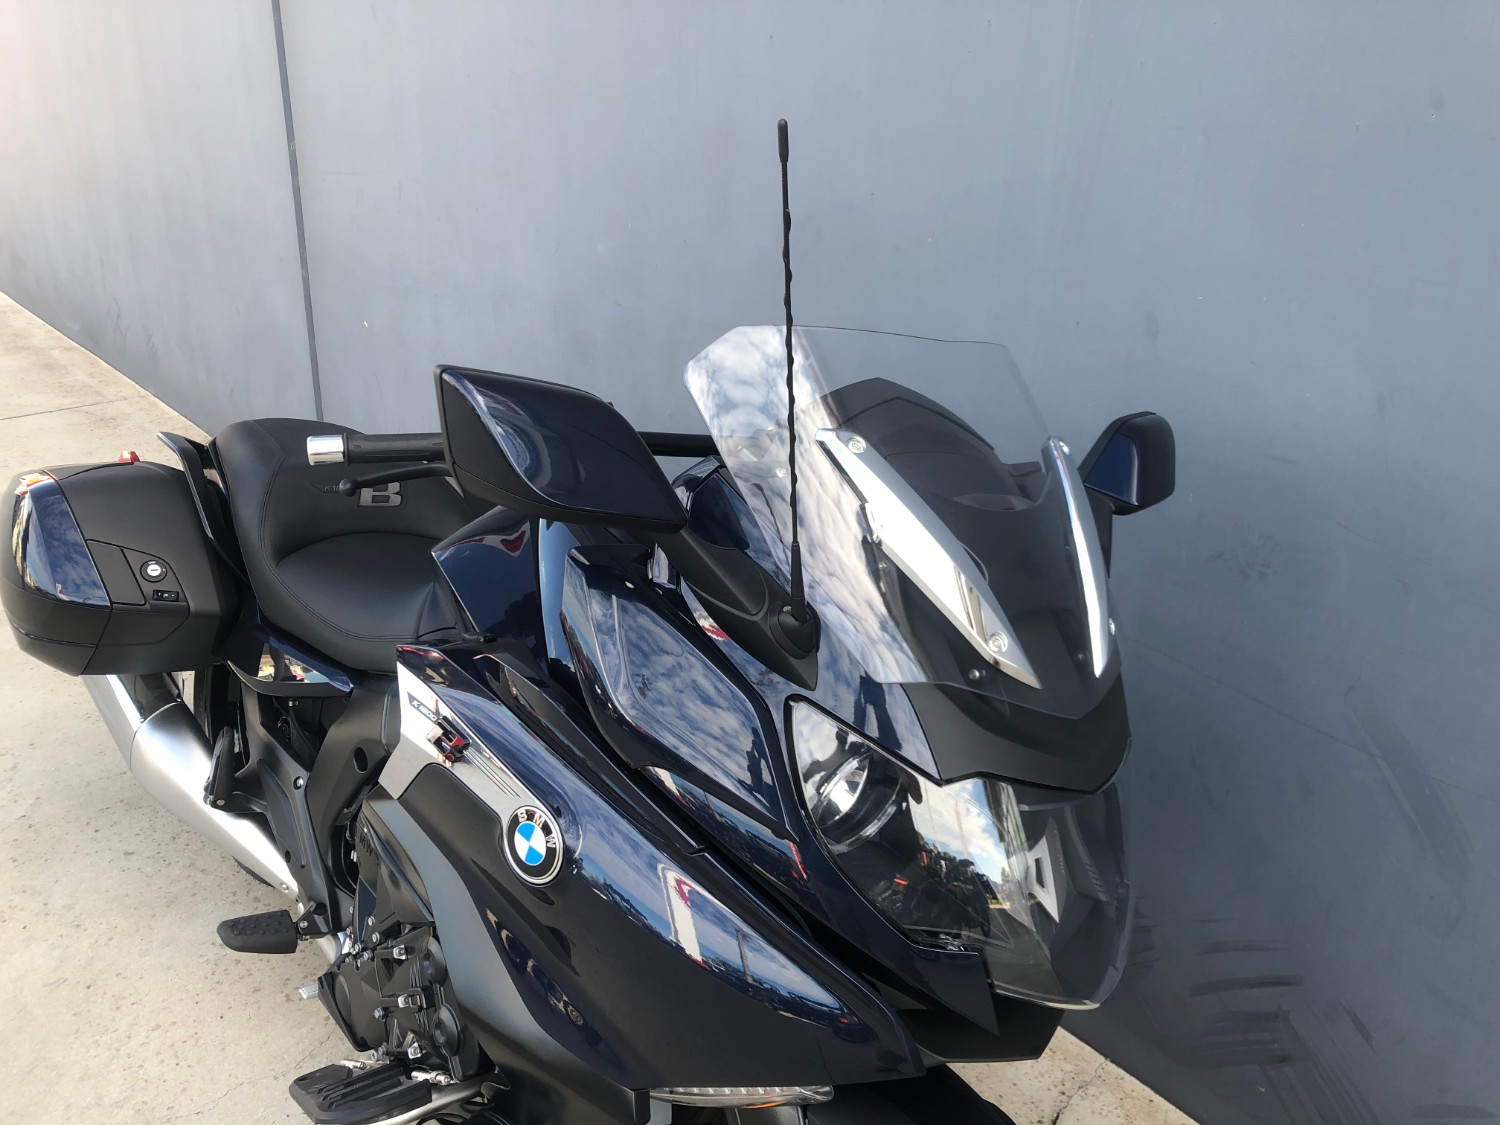 2019 BMW K1600 B Deluxe Motorcycle Image 26